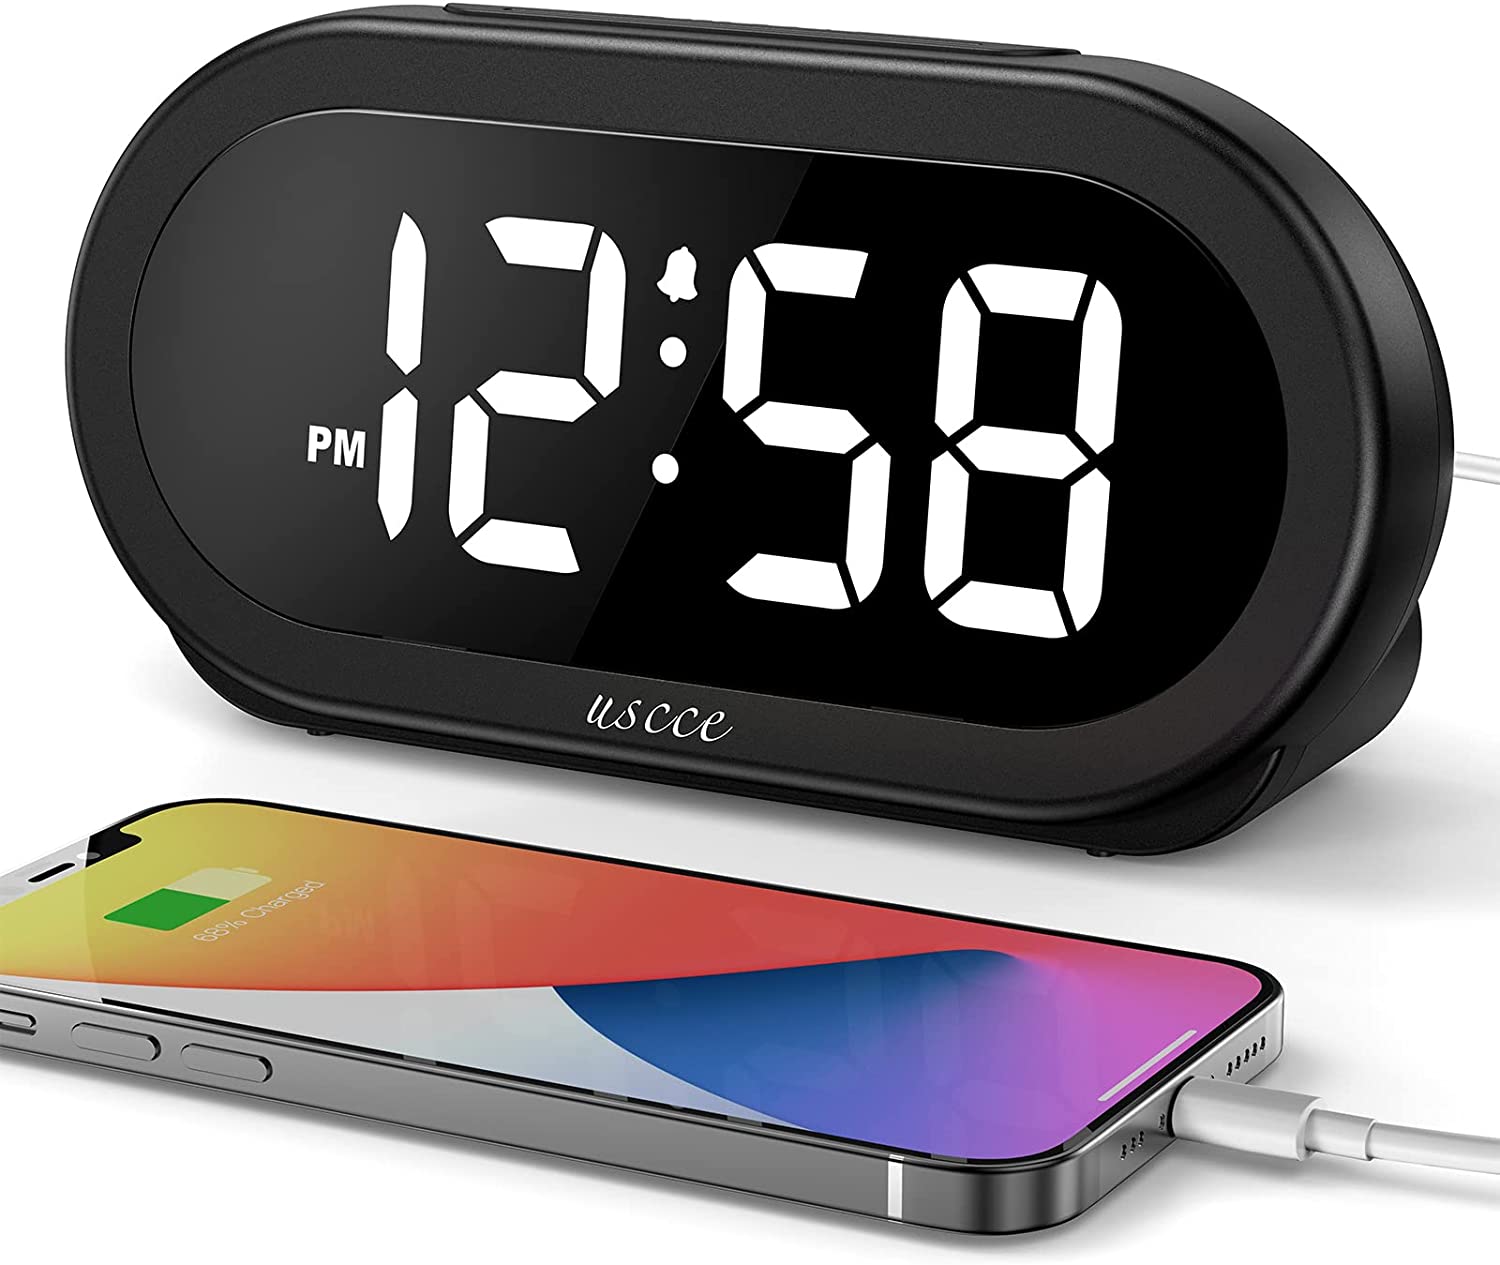 USCCE Customizable Easy Snooze Alarm Clock